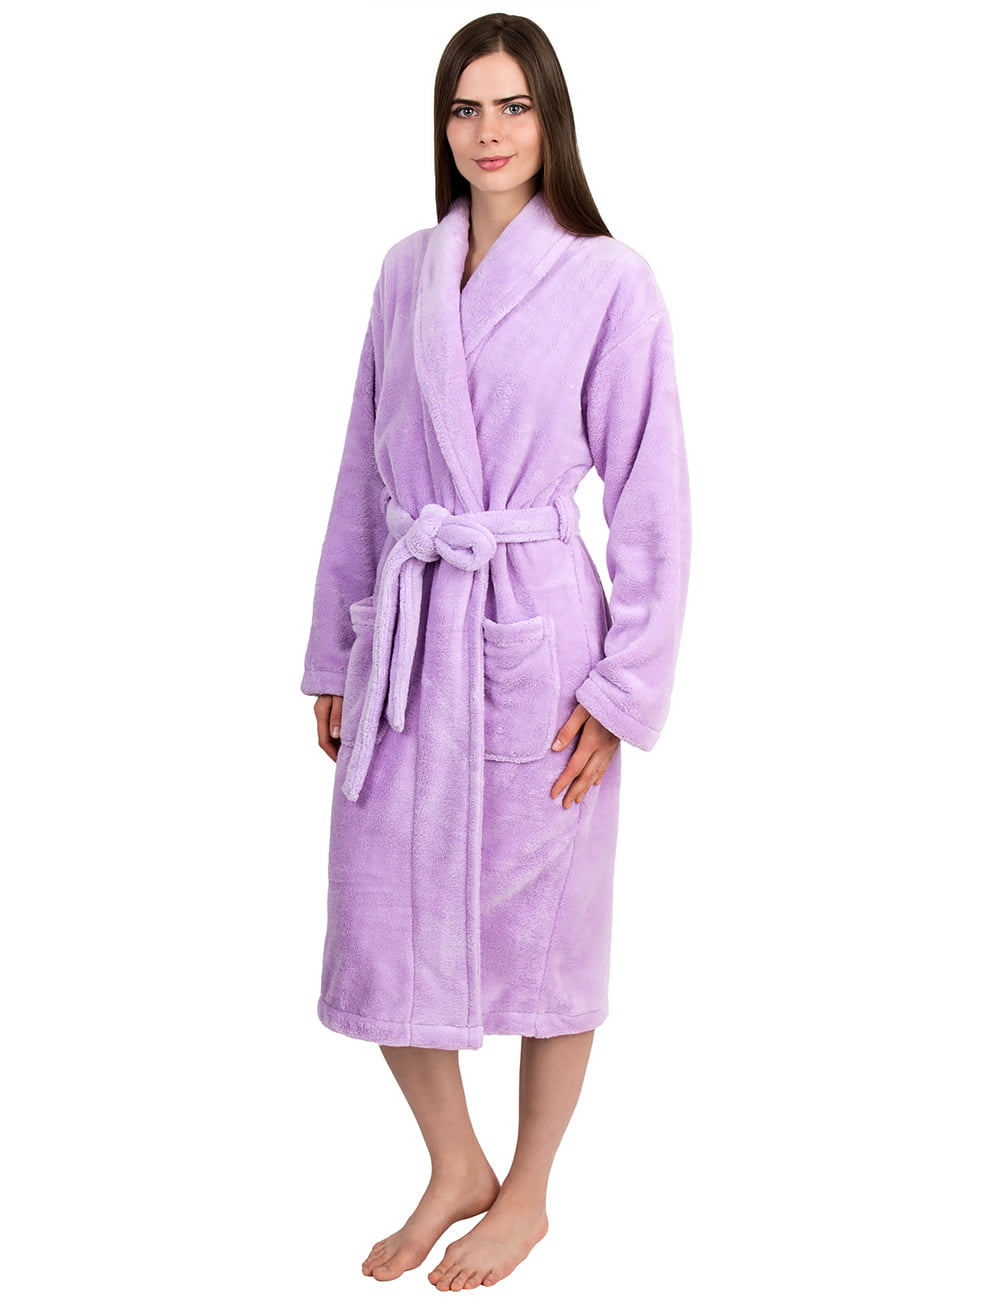 TowelSelections Women's Super Soft Plush Bathrobe Fleece Spa Robe Large ...